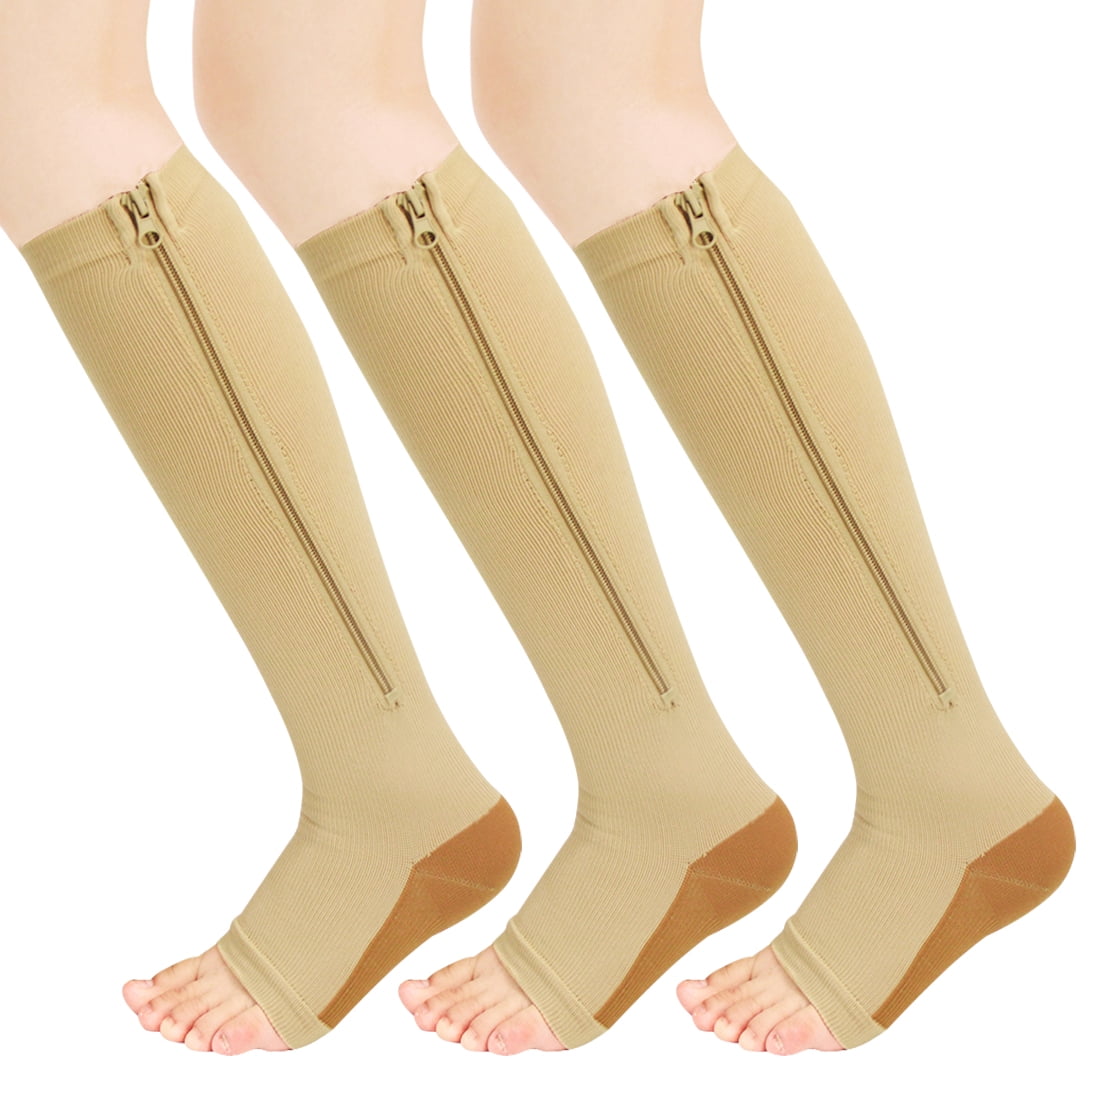 ZURU BUNCH Zip Socks Compression Socks with Zipper Supports Leg